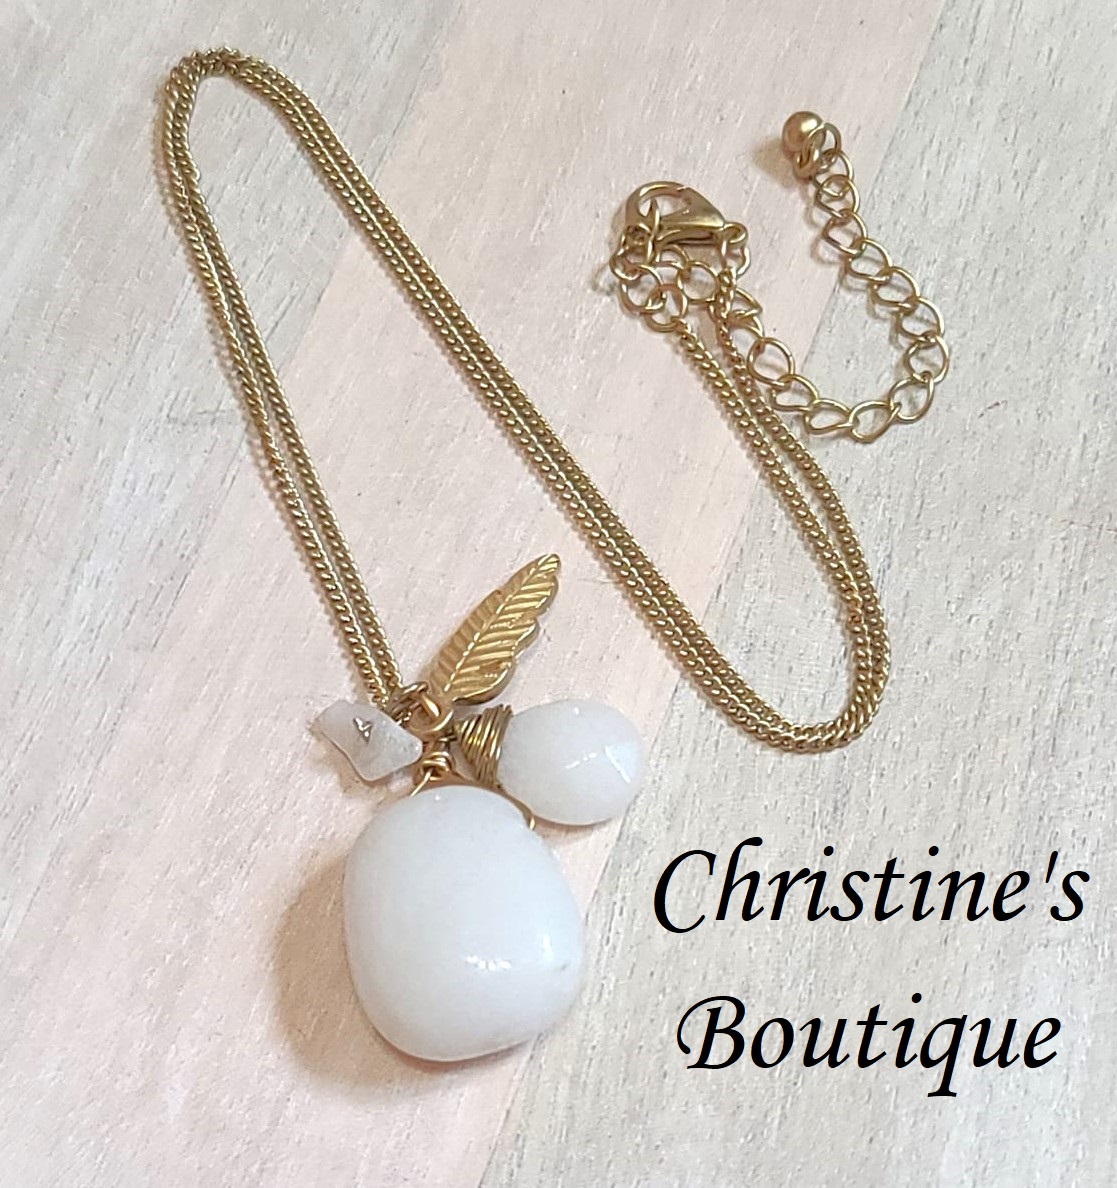 Gemstone pendant necklace, white quartz gemstone pendant, with feather charm, necklace - Click Image to Close